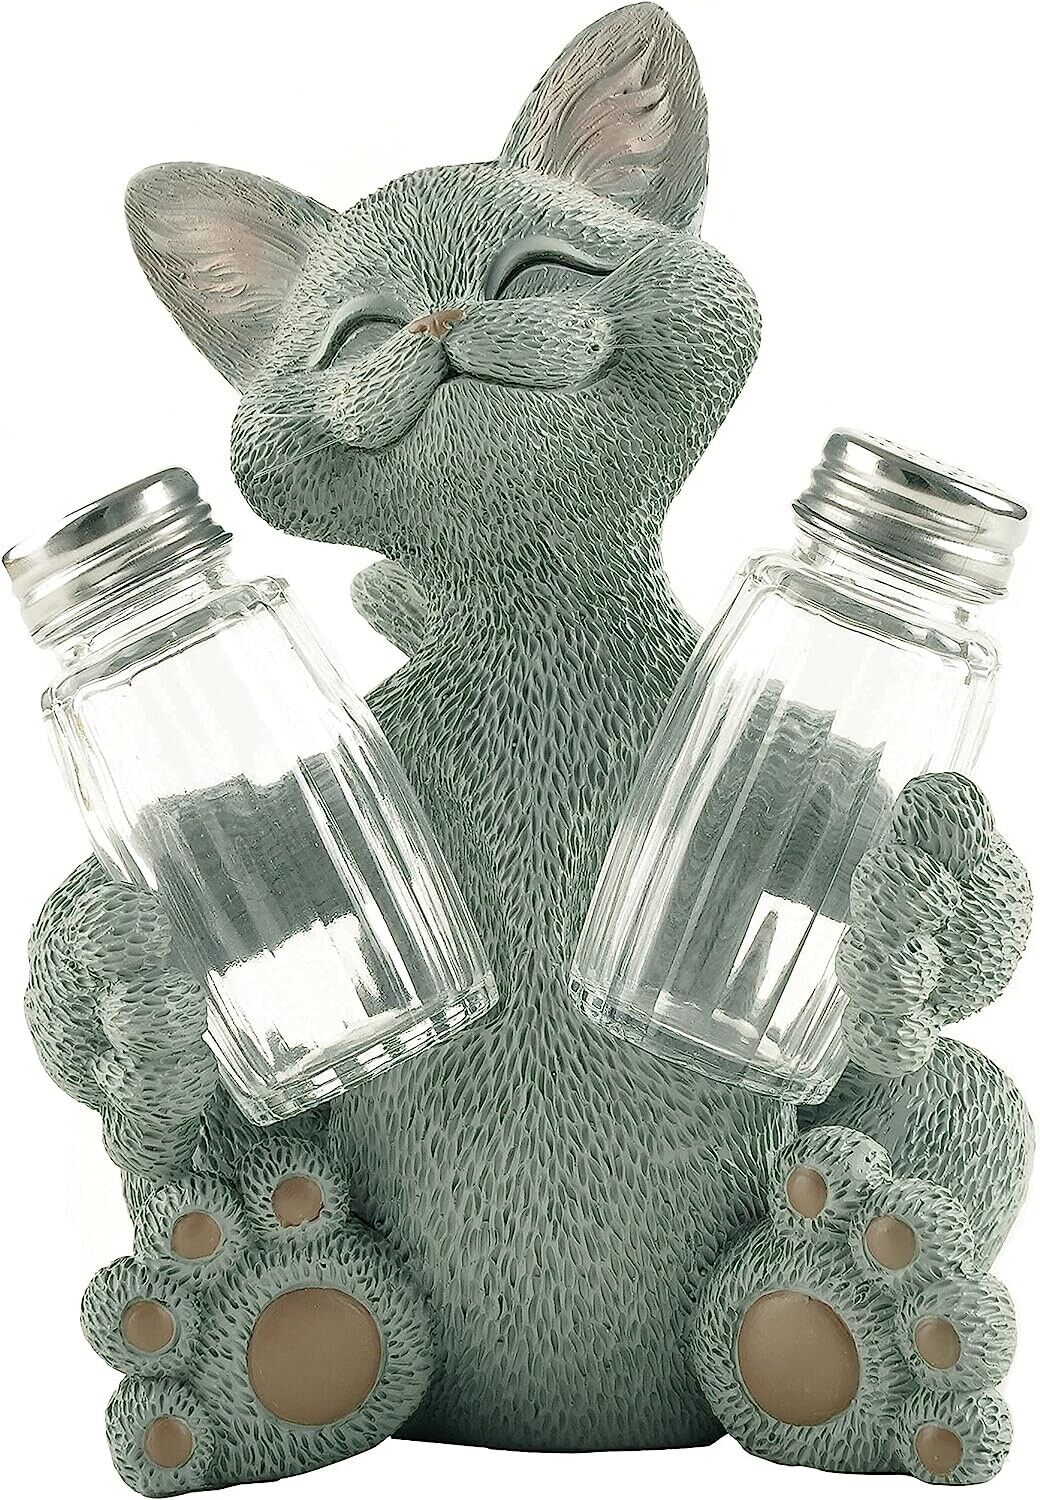 Whimsical Grey Cat Salt & Pepper Shaker Holder Figurine Decorative Collectible